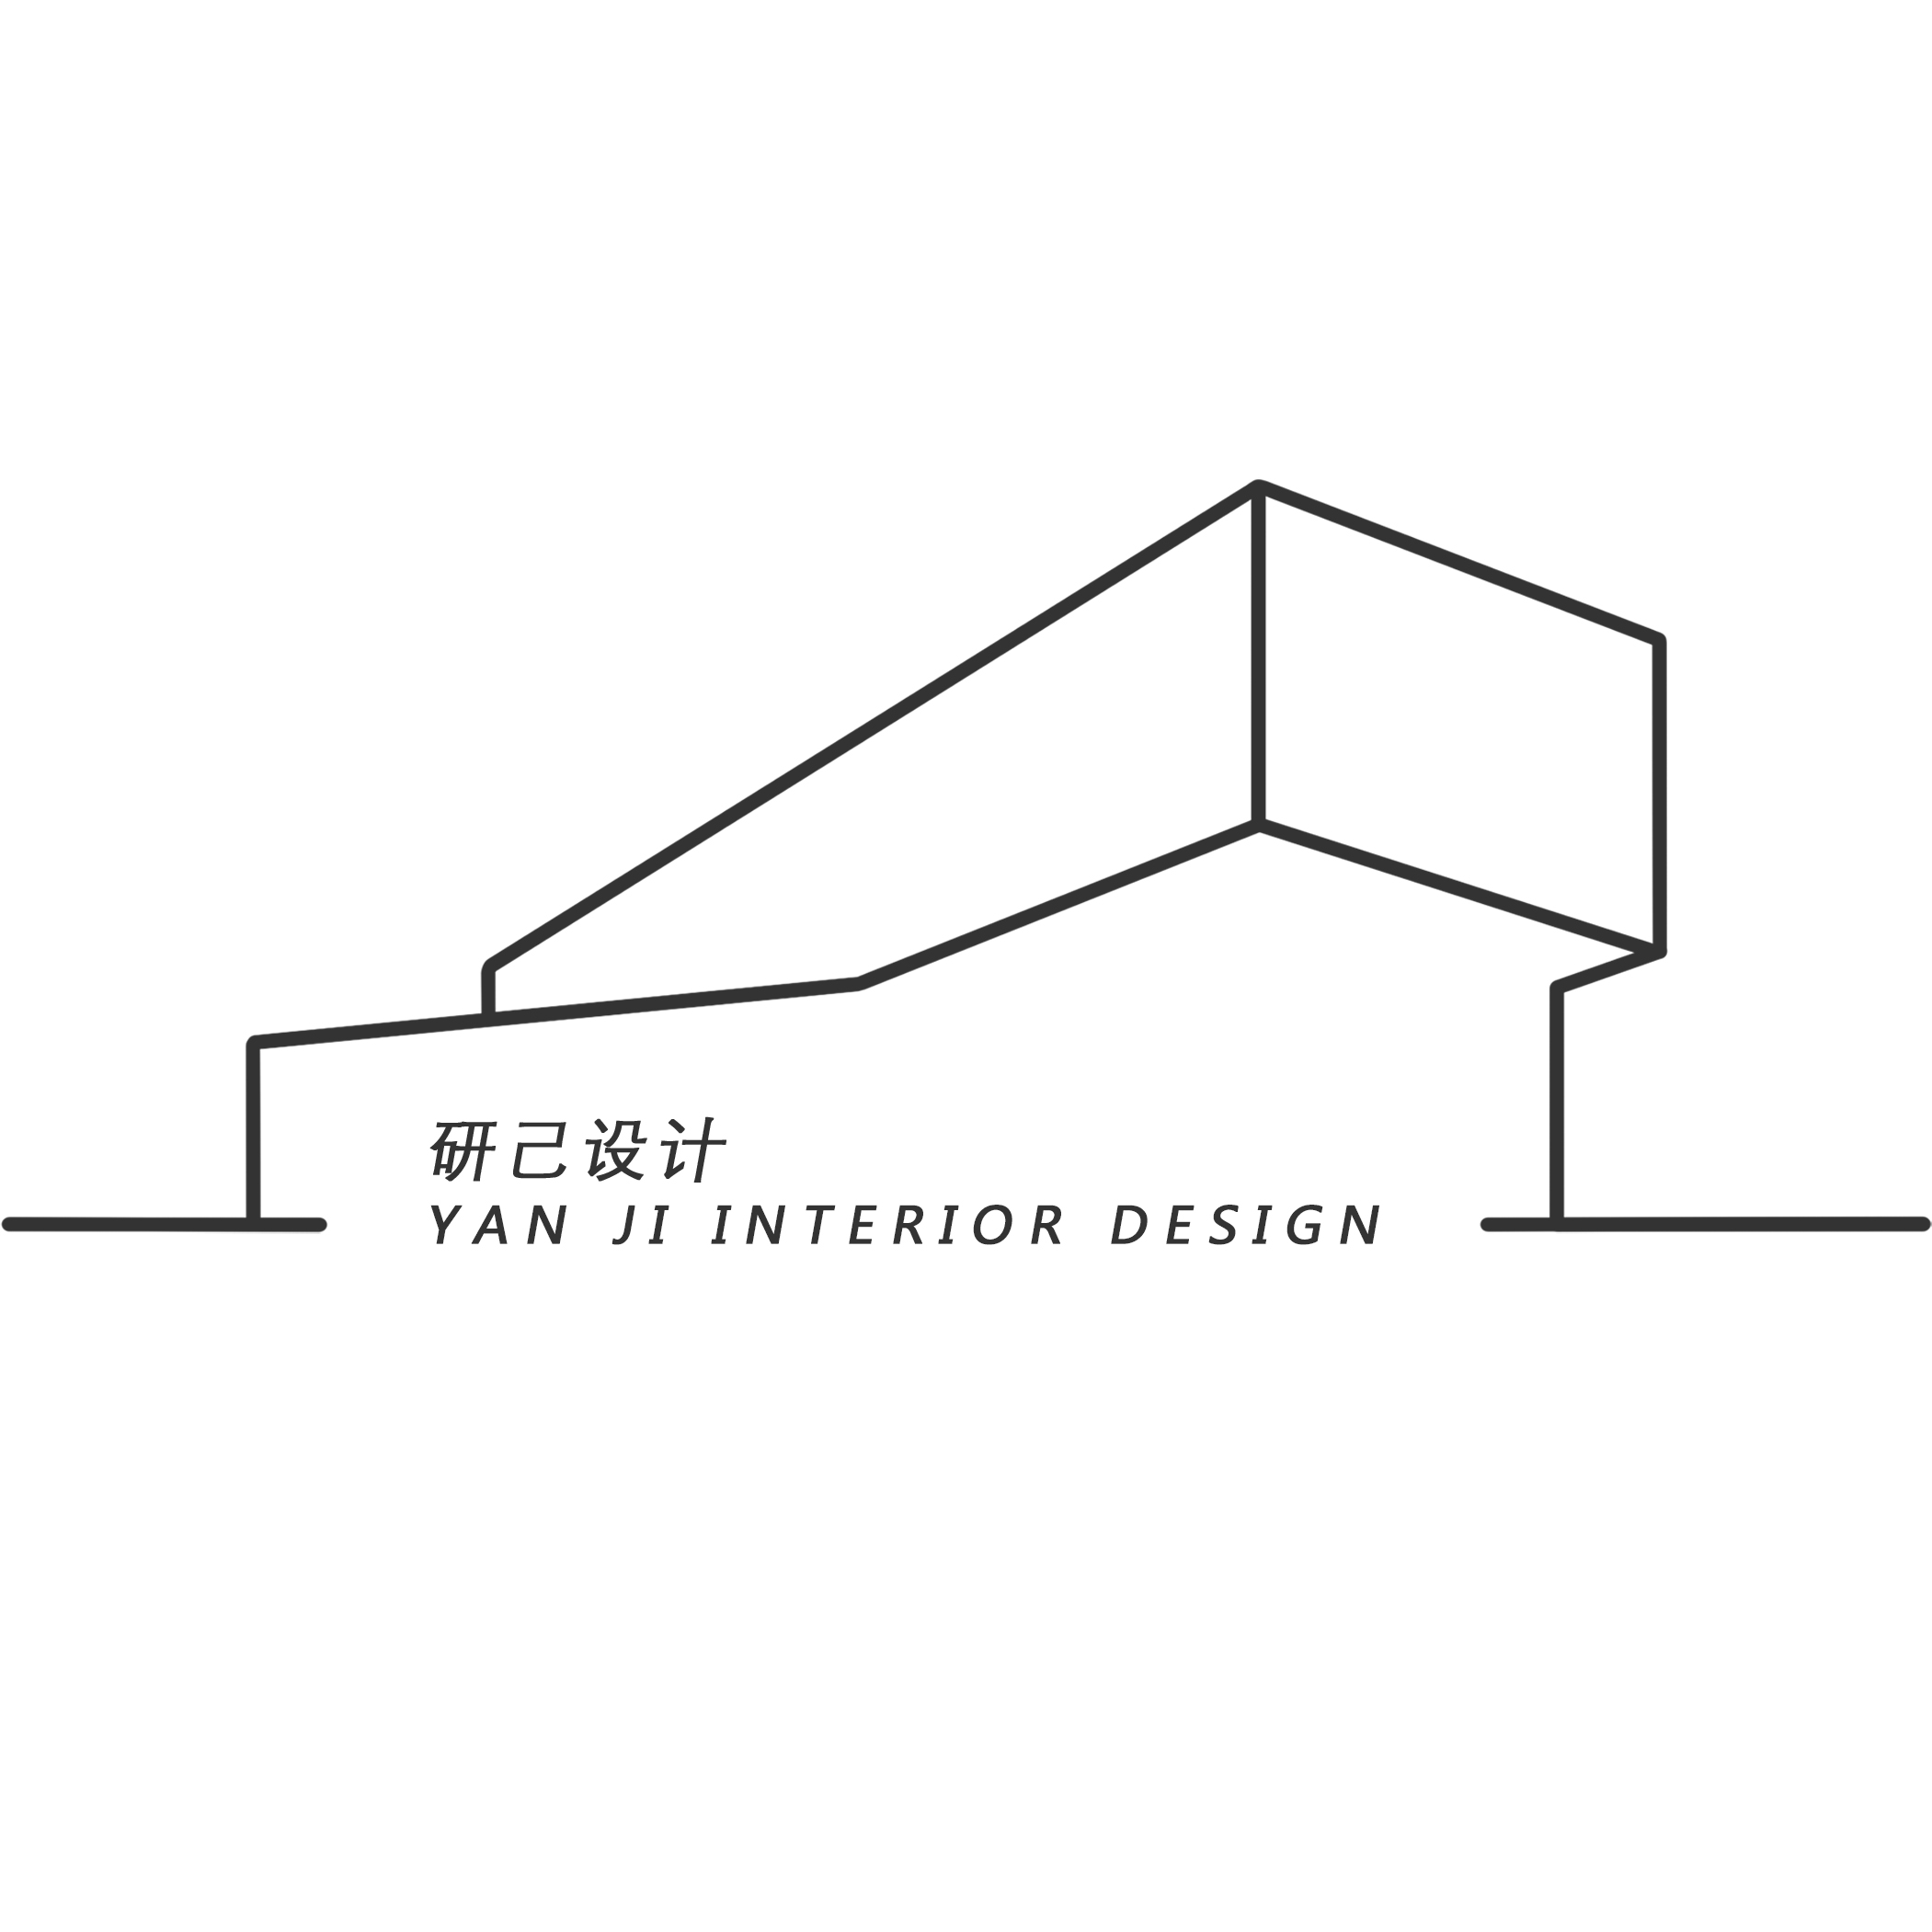 Yan Ji Design